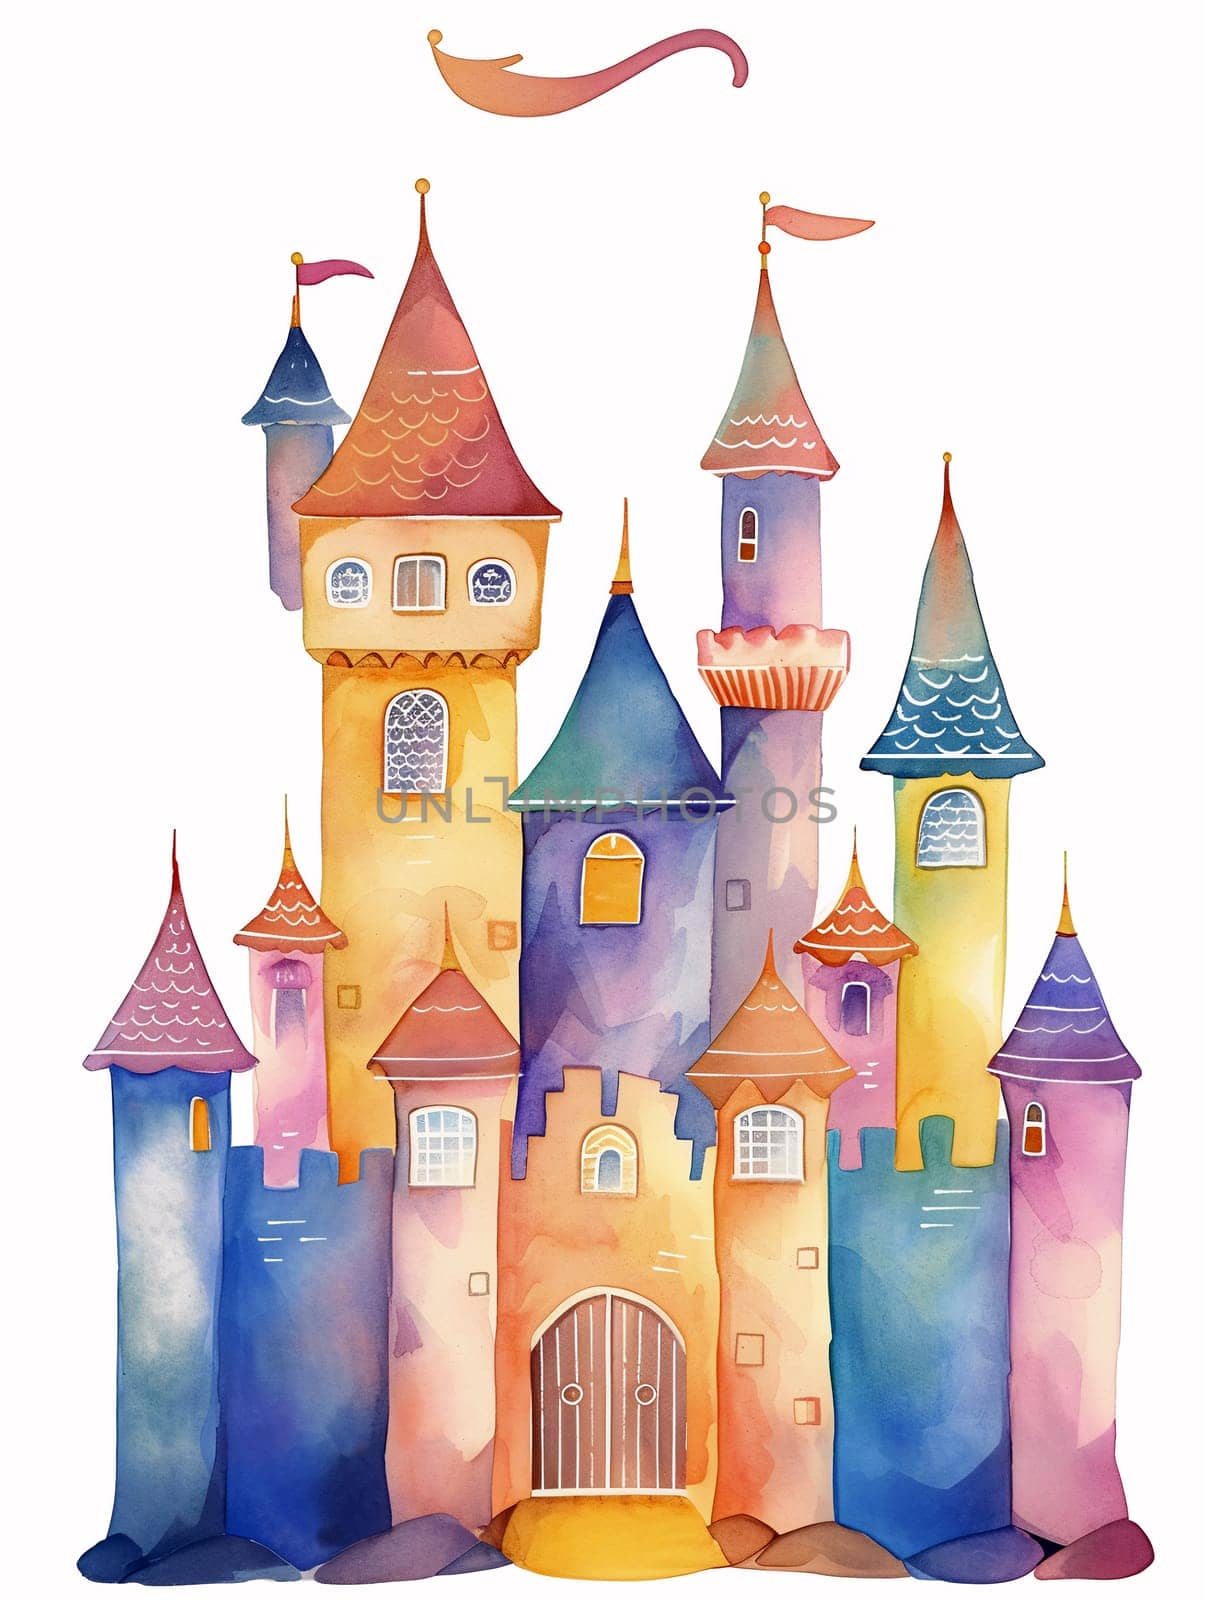 Enchanting Watercolor Castle Illustration by chrisroll